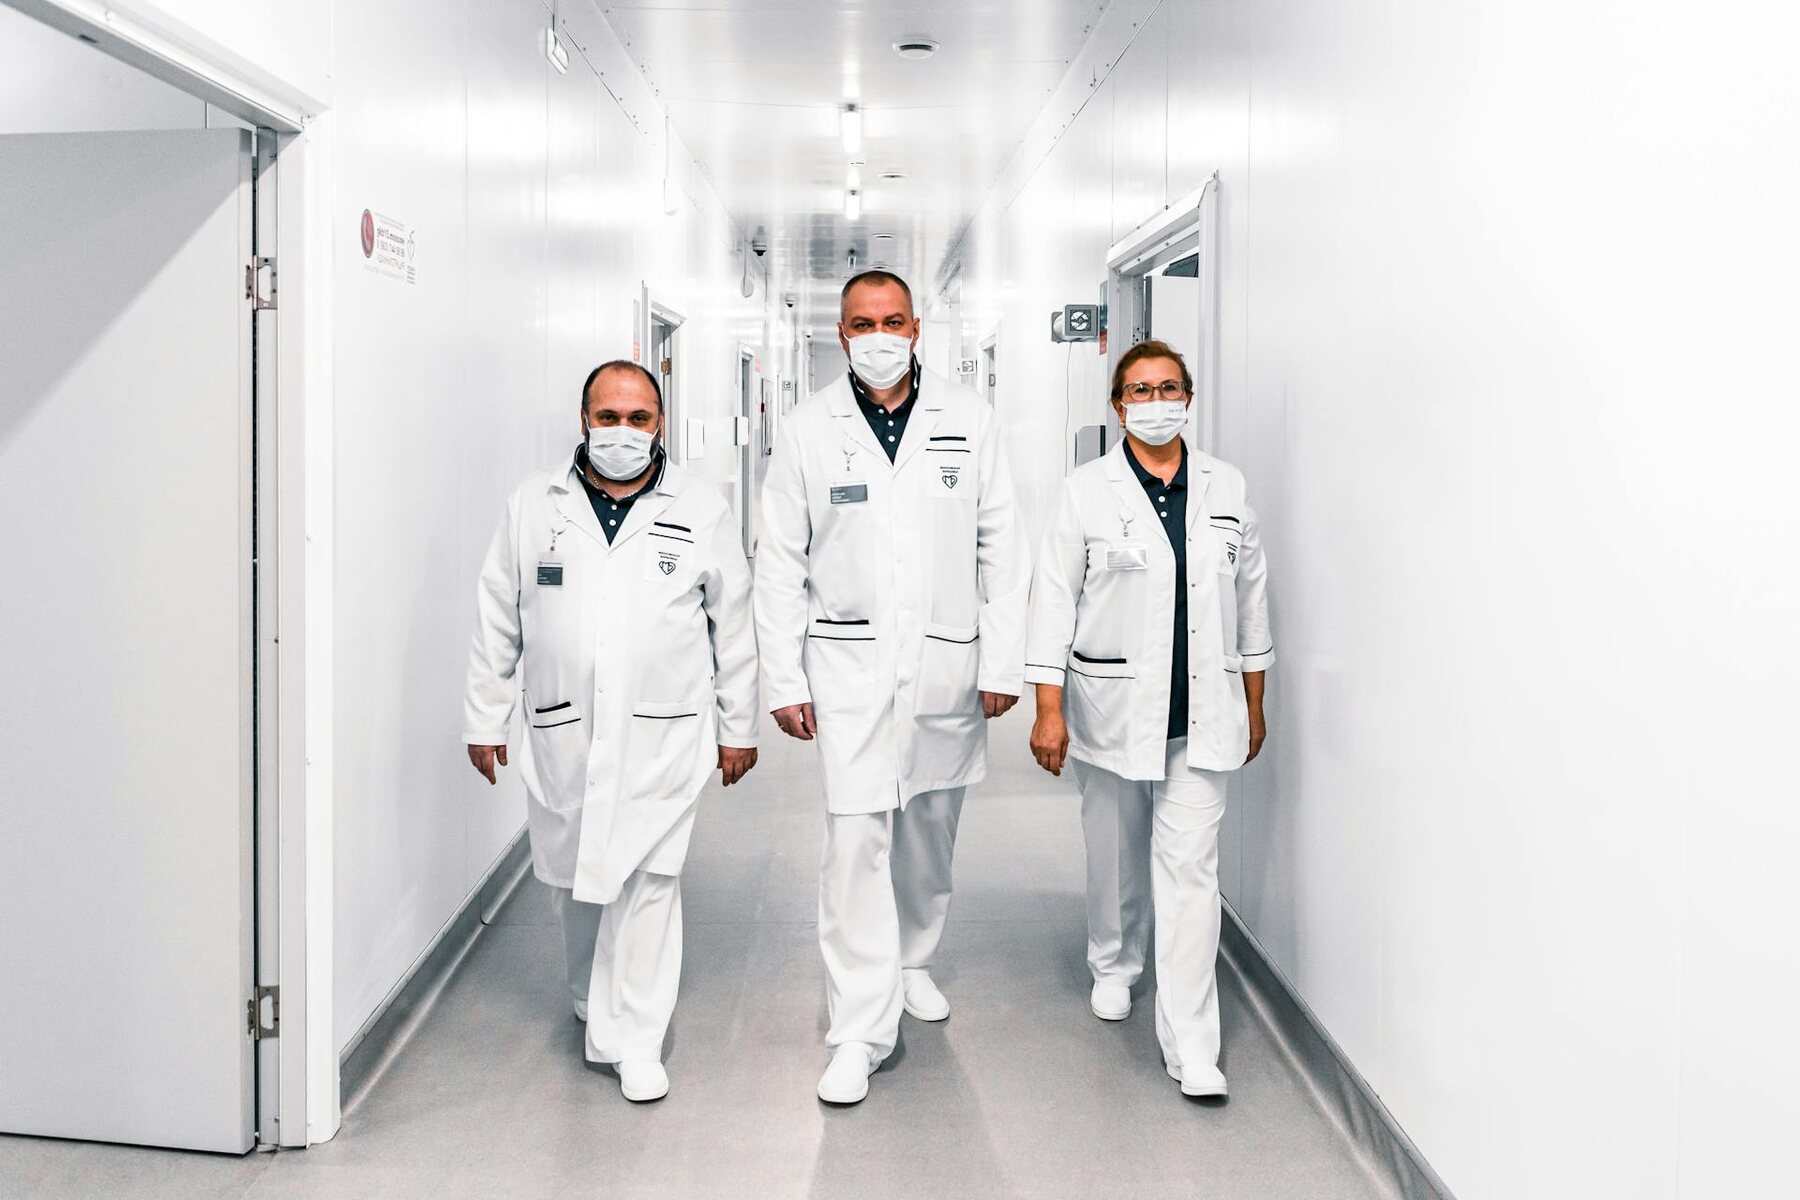 Three doctors in white coats walking down a hospital hallway